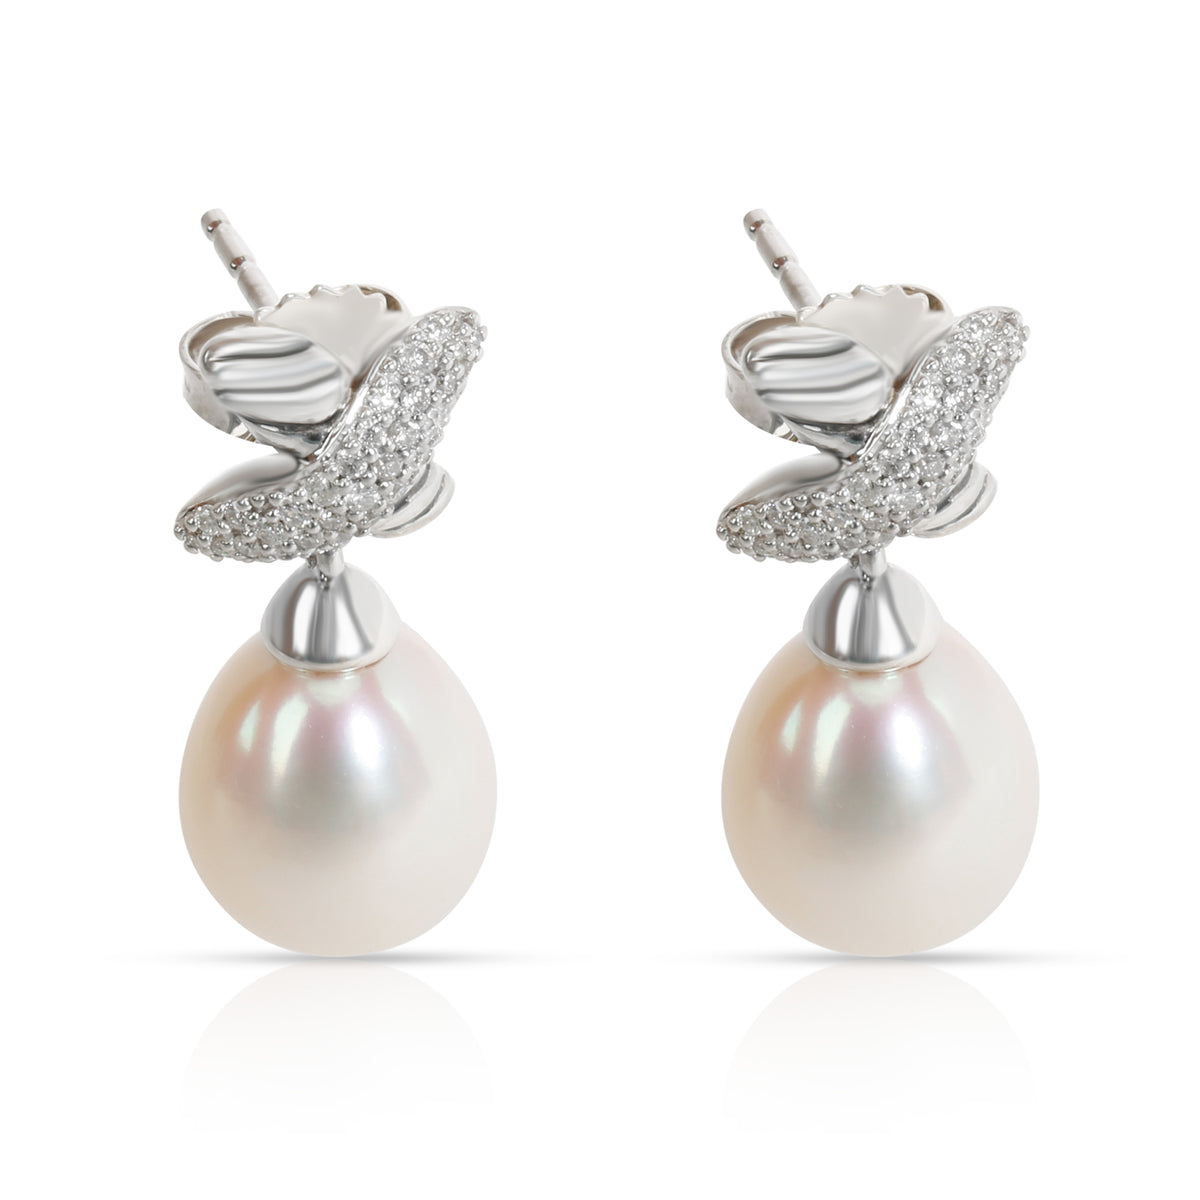 David Yurman Cable X Diamond & Pearl Earrings in14K Gold/Sterling Silver 0.28ctw